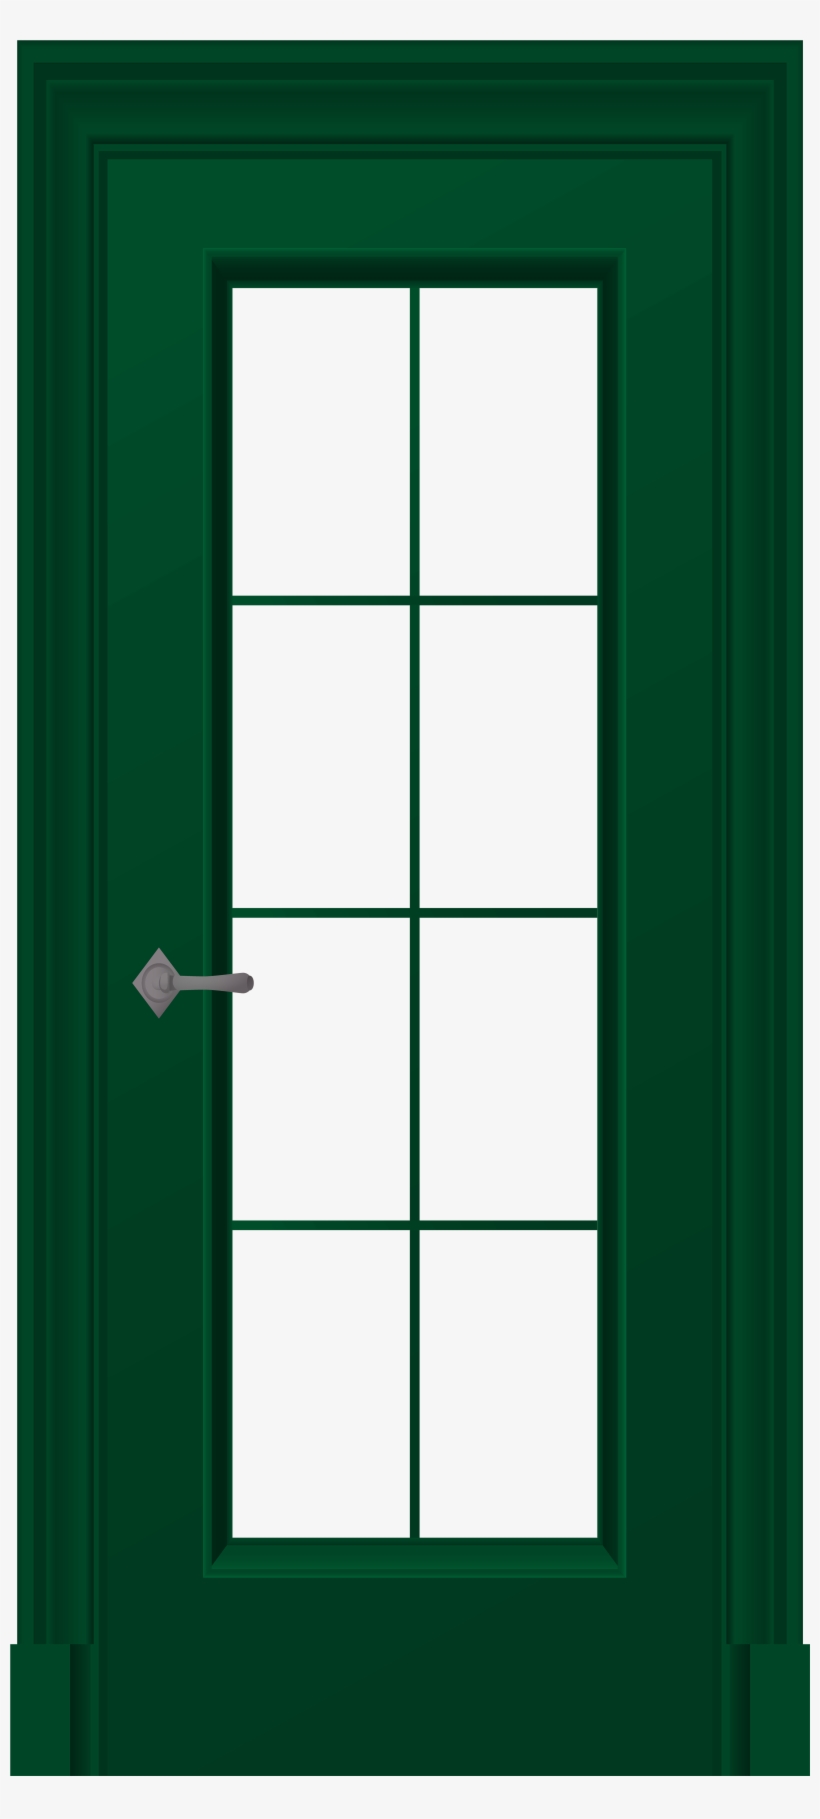 Green Door Png Clip Art - Green Door Png, transparent png #2873382